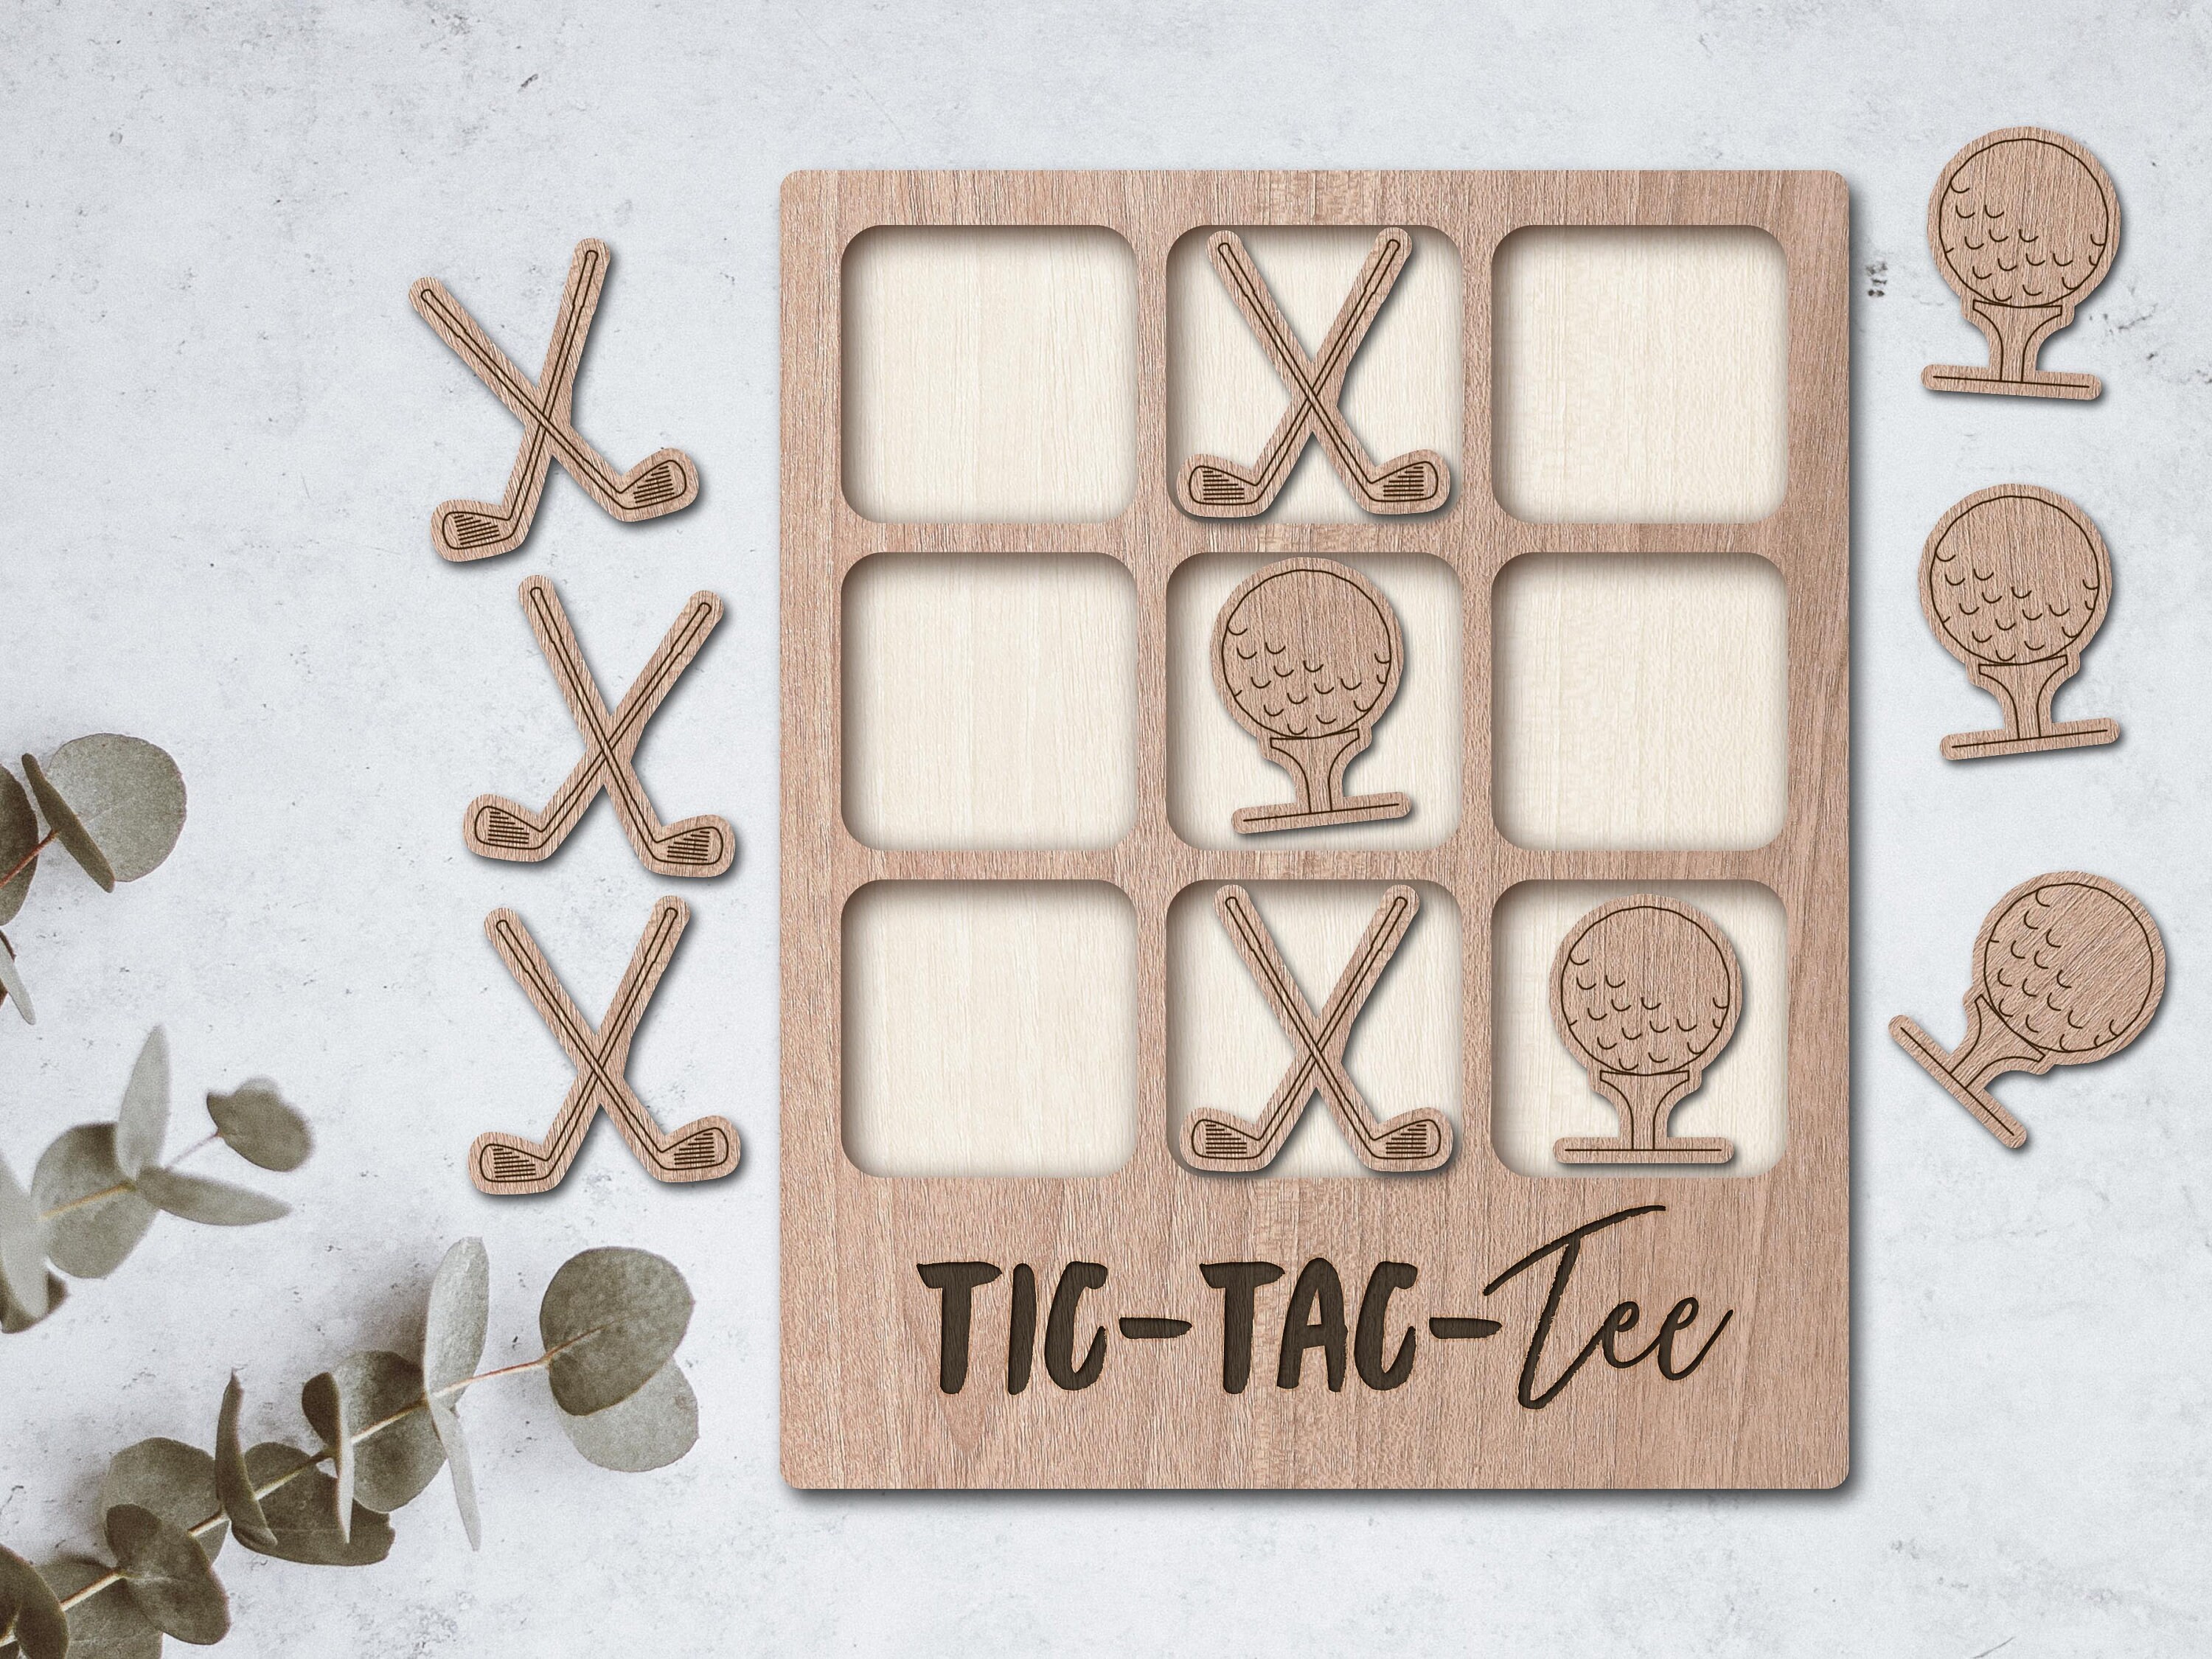 Tic-Tac-Toe Spiele  online bei golf toys bestellen